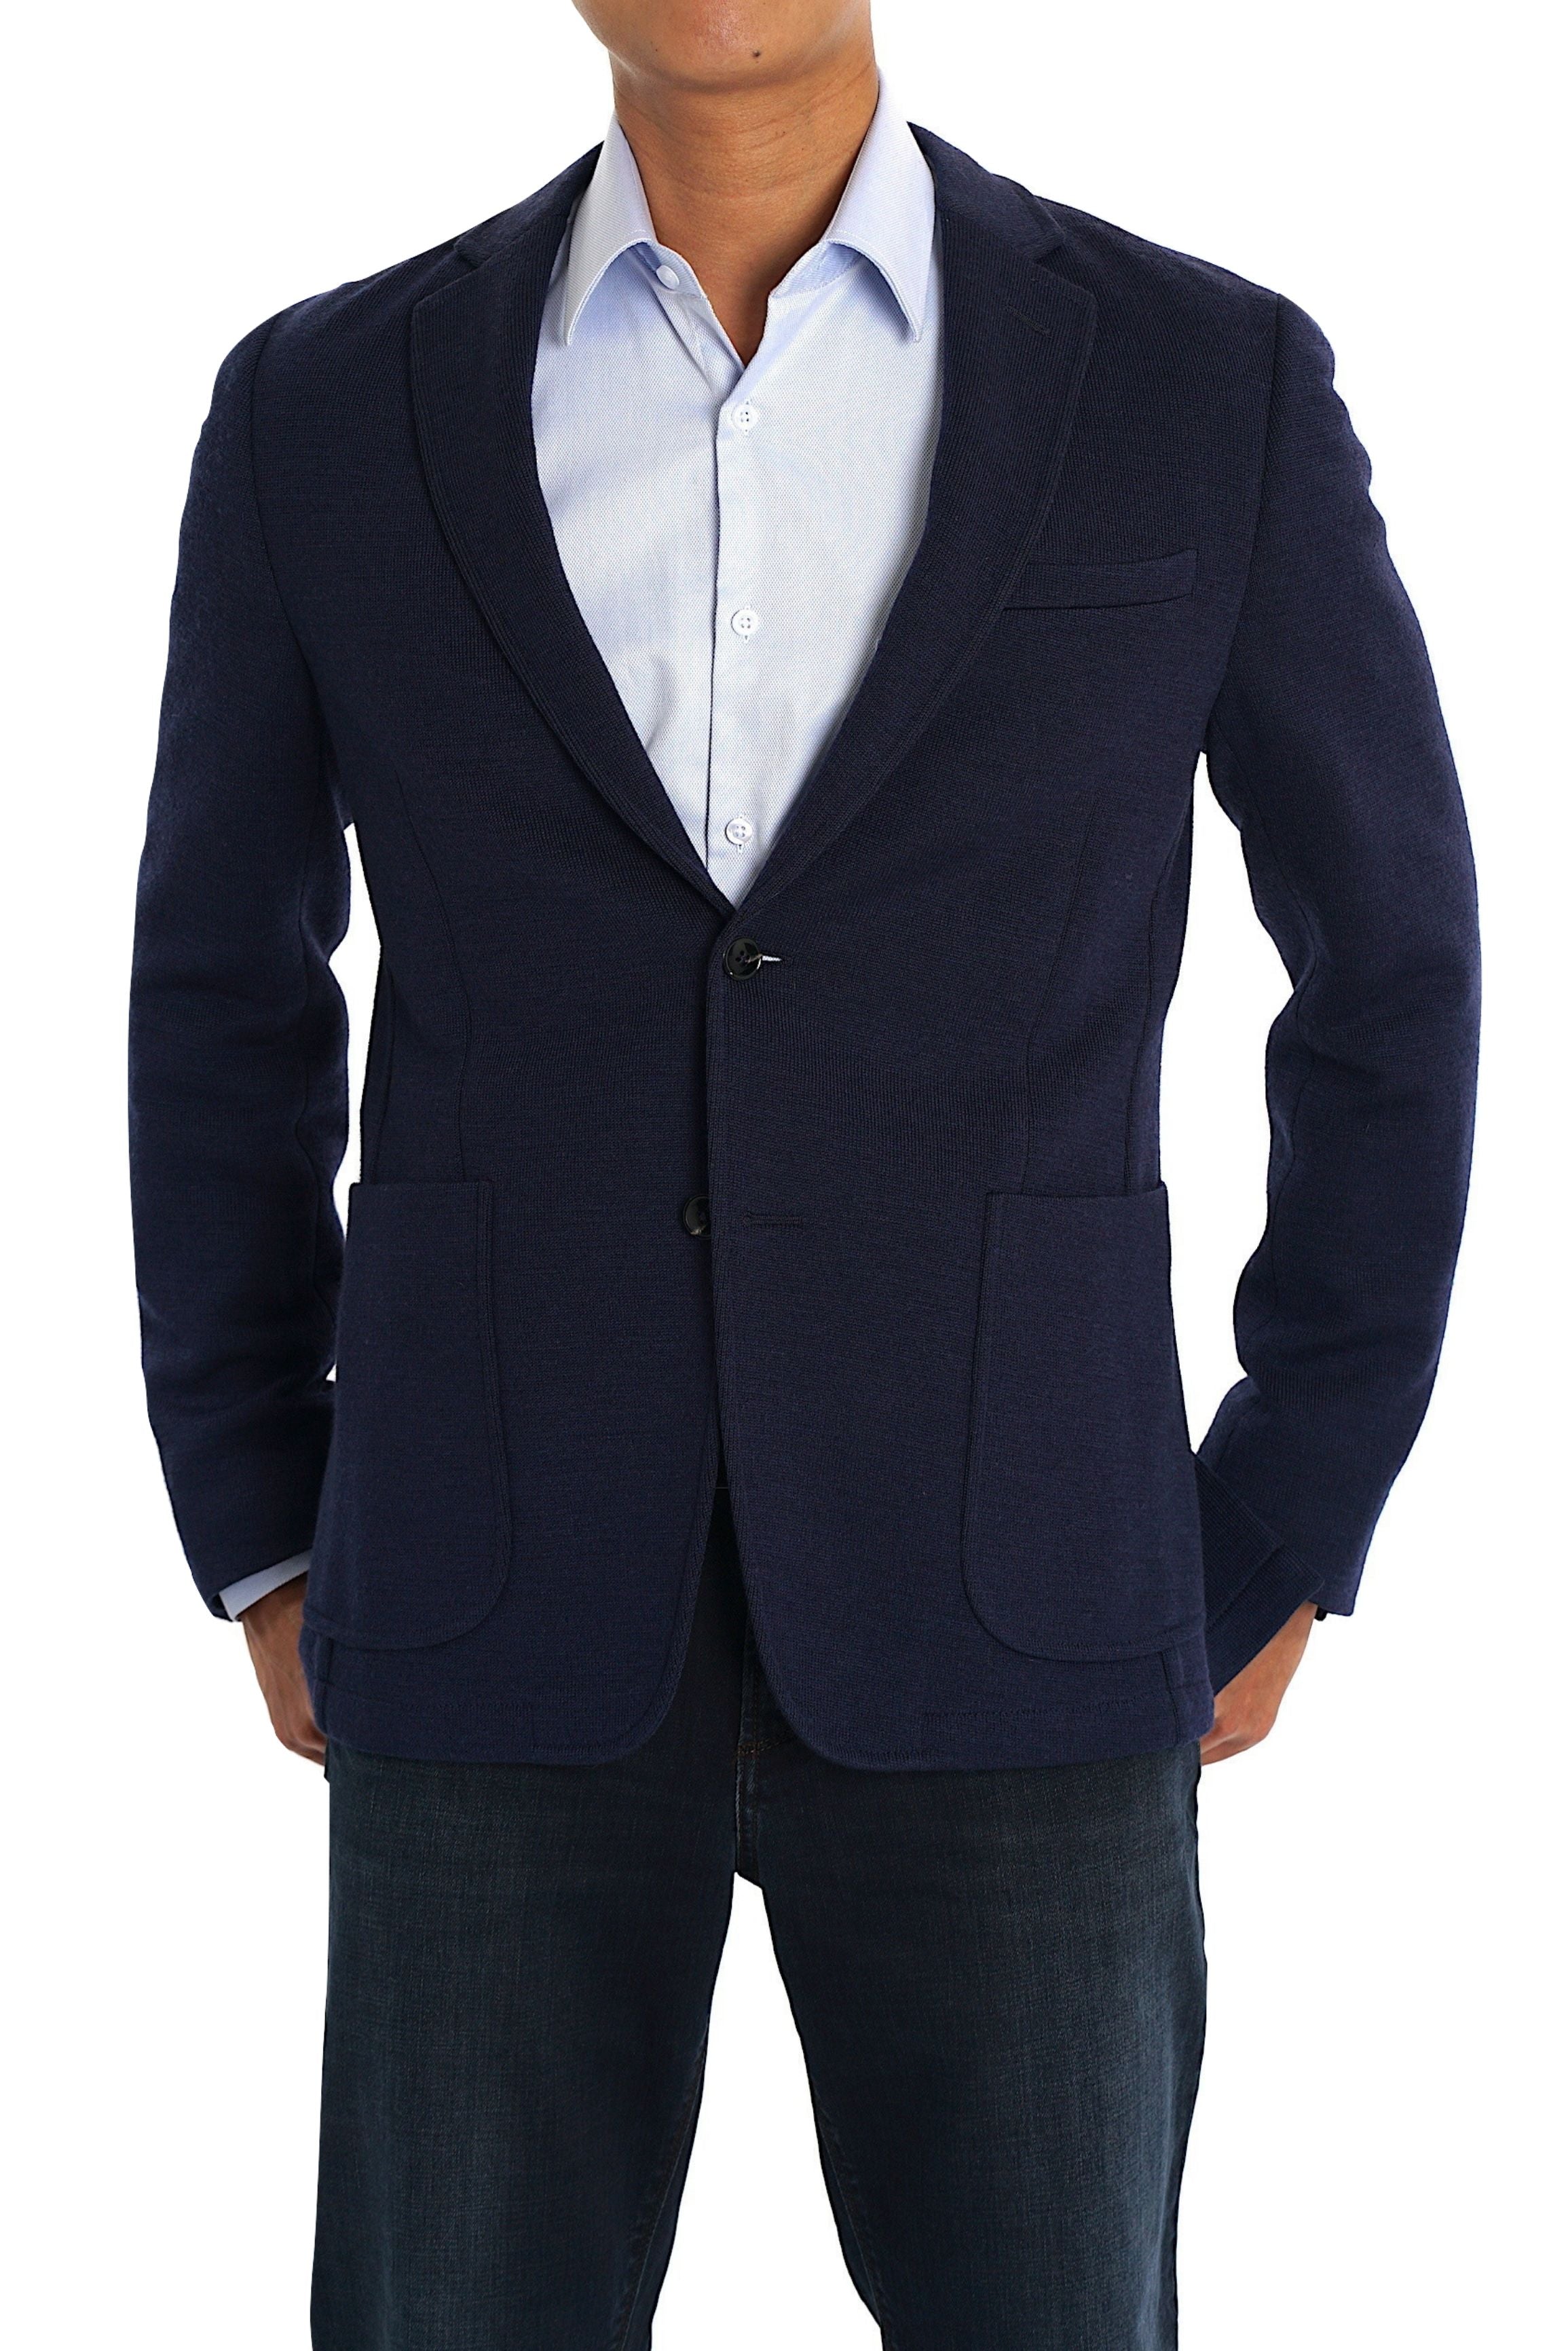 Pal Zileri Navy Blue Sport Coat - Mastroianni Fashions